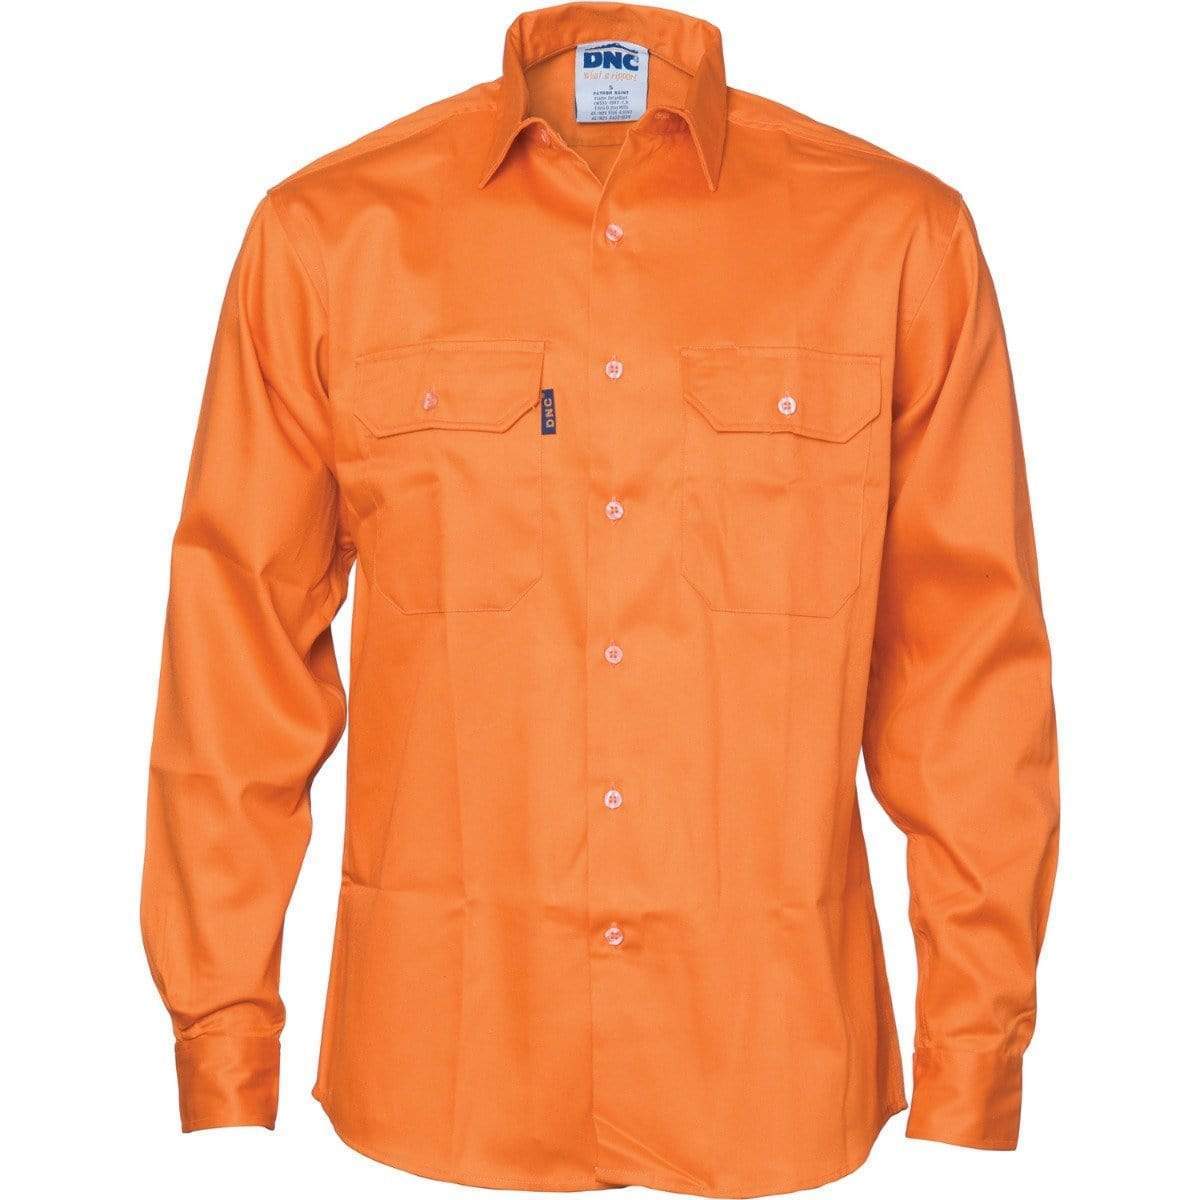 Dnc Workwear Patron Saint Flame Retardant Long Sleeve Drill Shirt - 3402 Work Wear DNC Workwear Orange S 